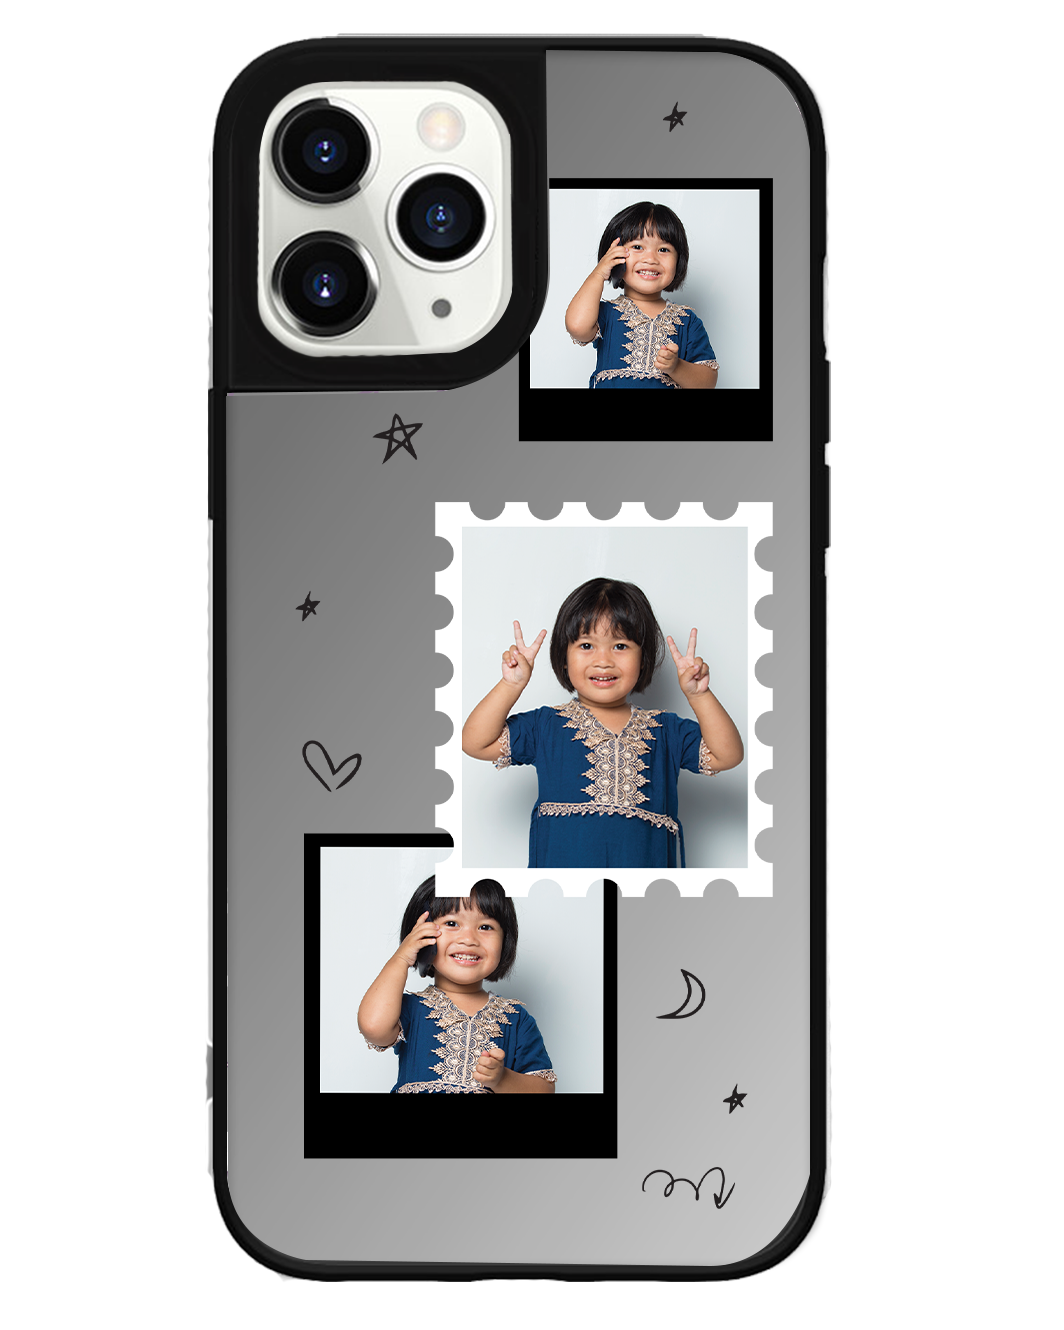 iPhone Mirror Grip Case - Face Grid Black Polaroid